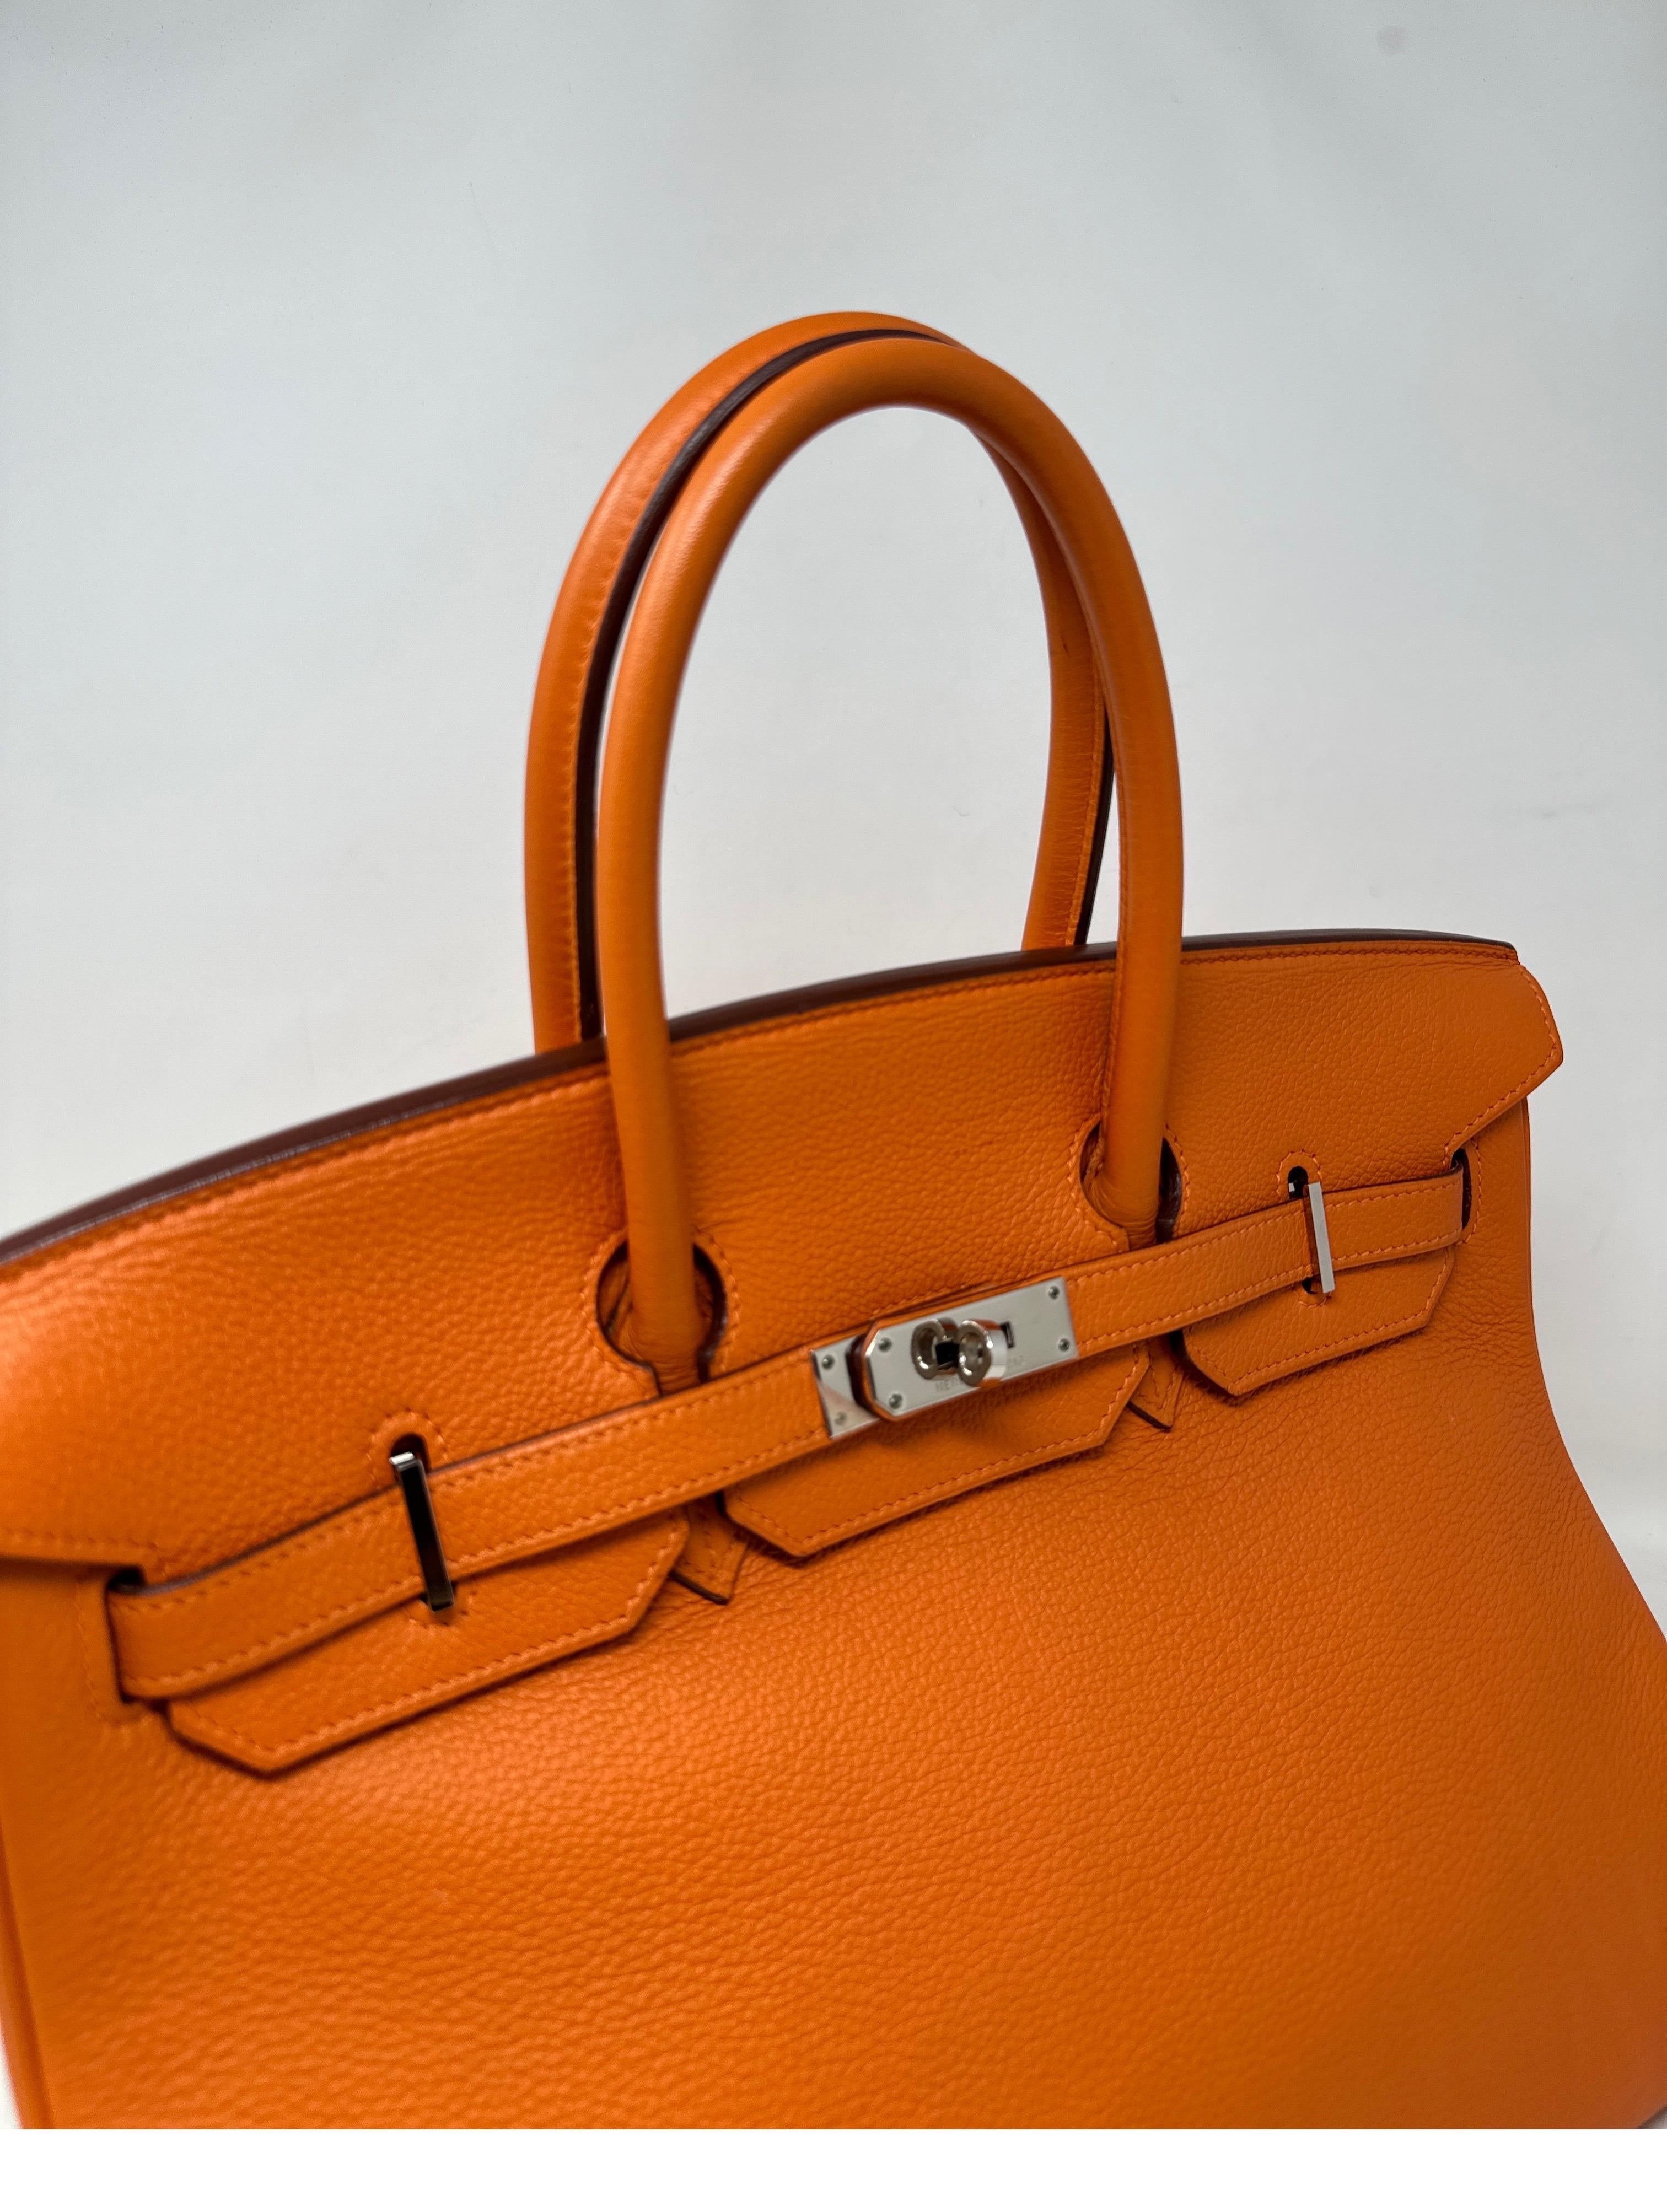  Hermès - Sac Birkin 35 orange  Unisexe 